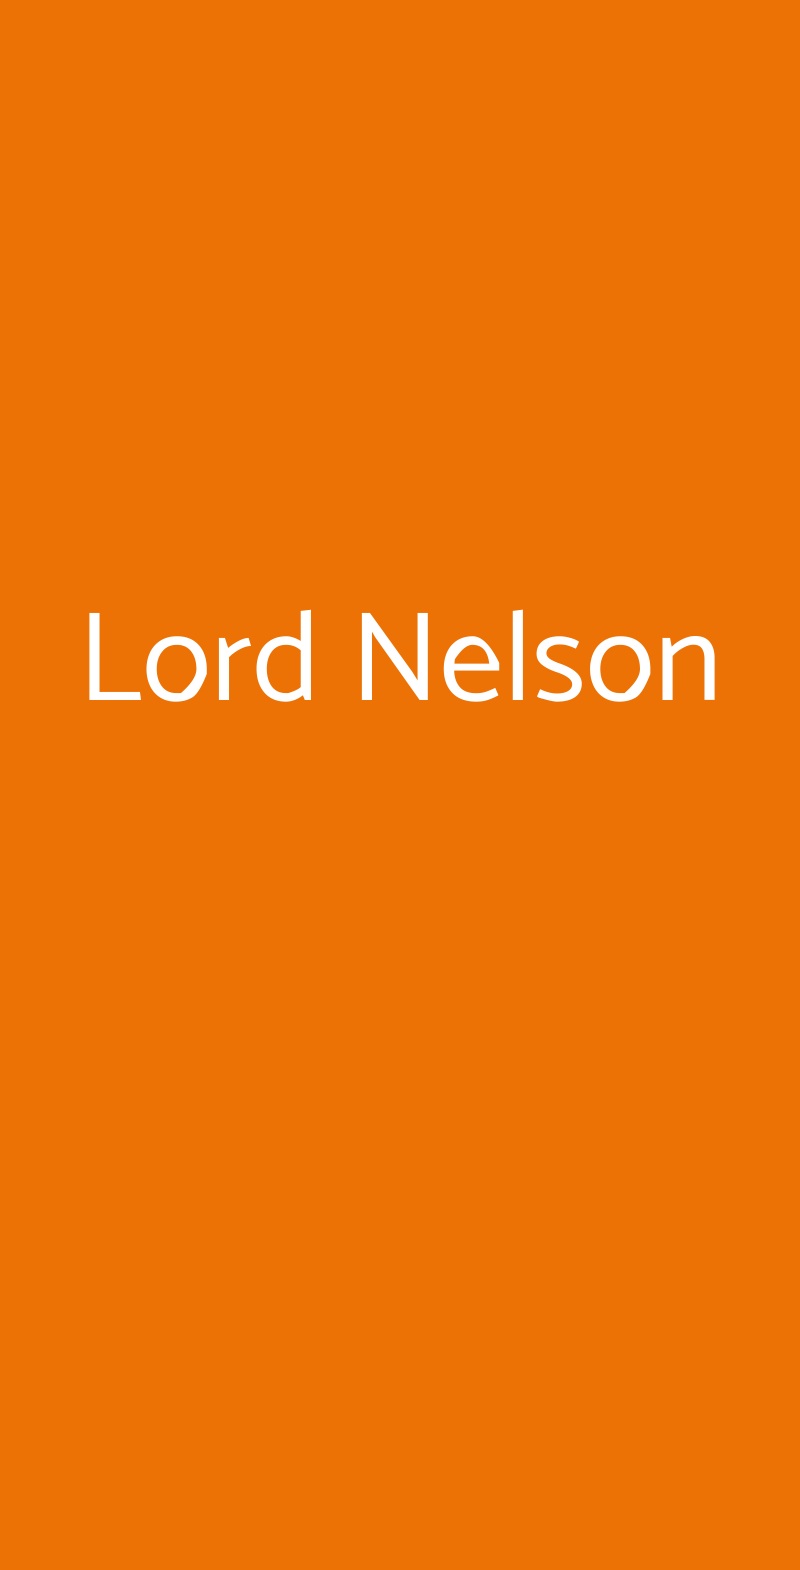 Lord Nelson Torino menù 1 pagina